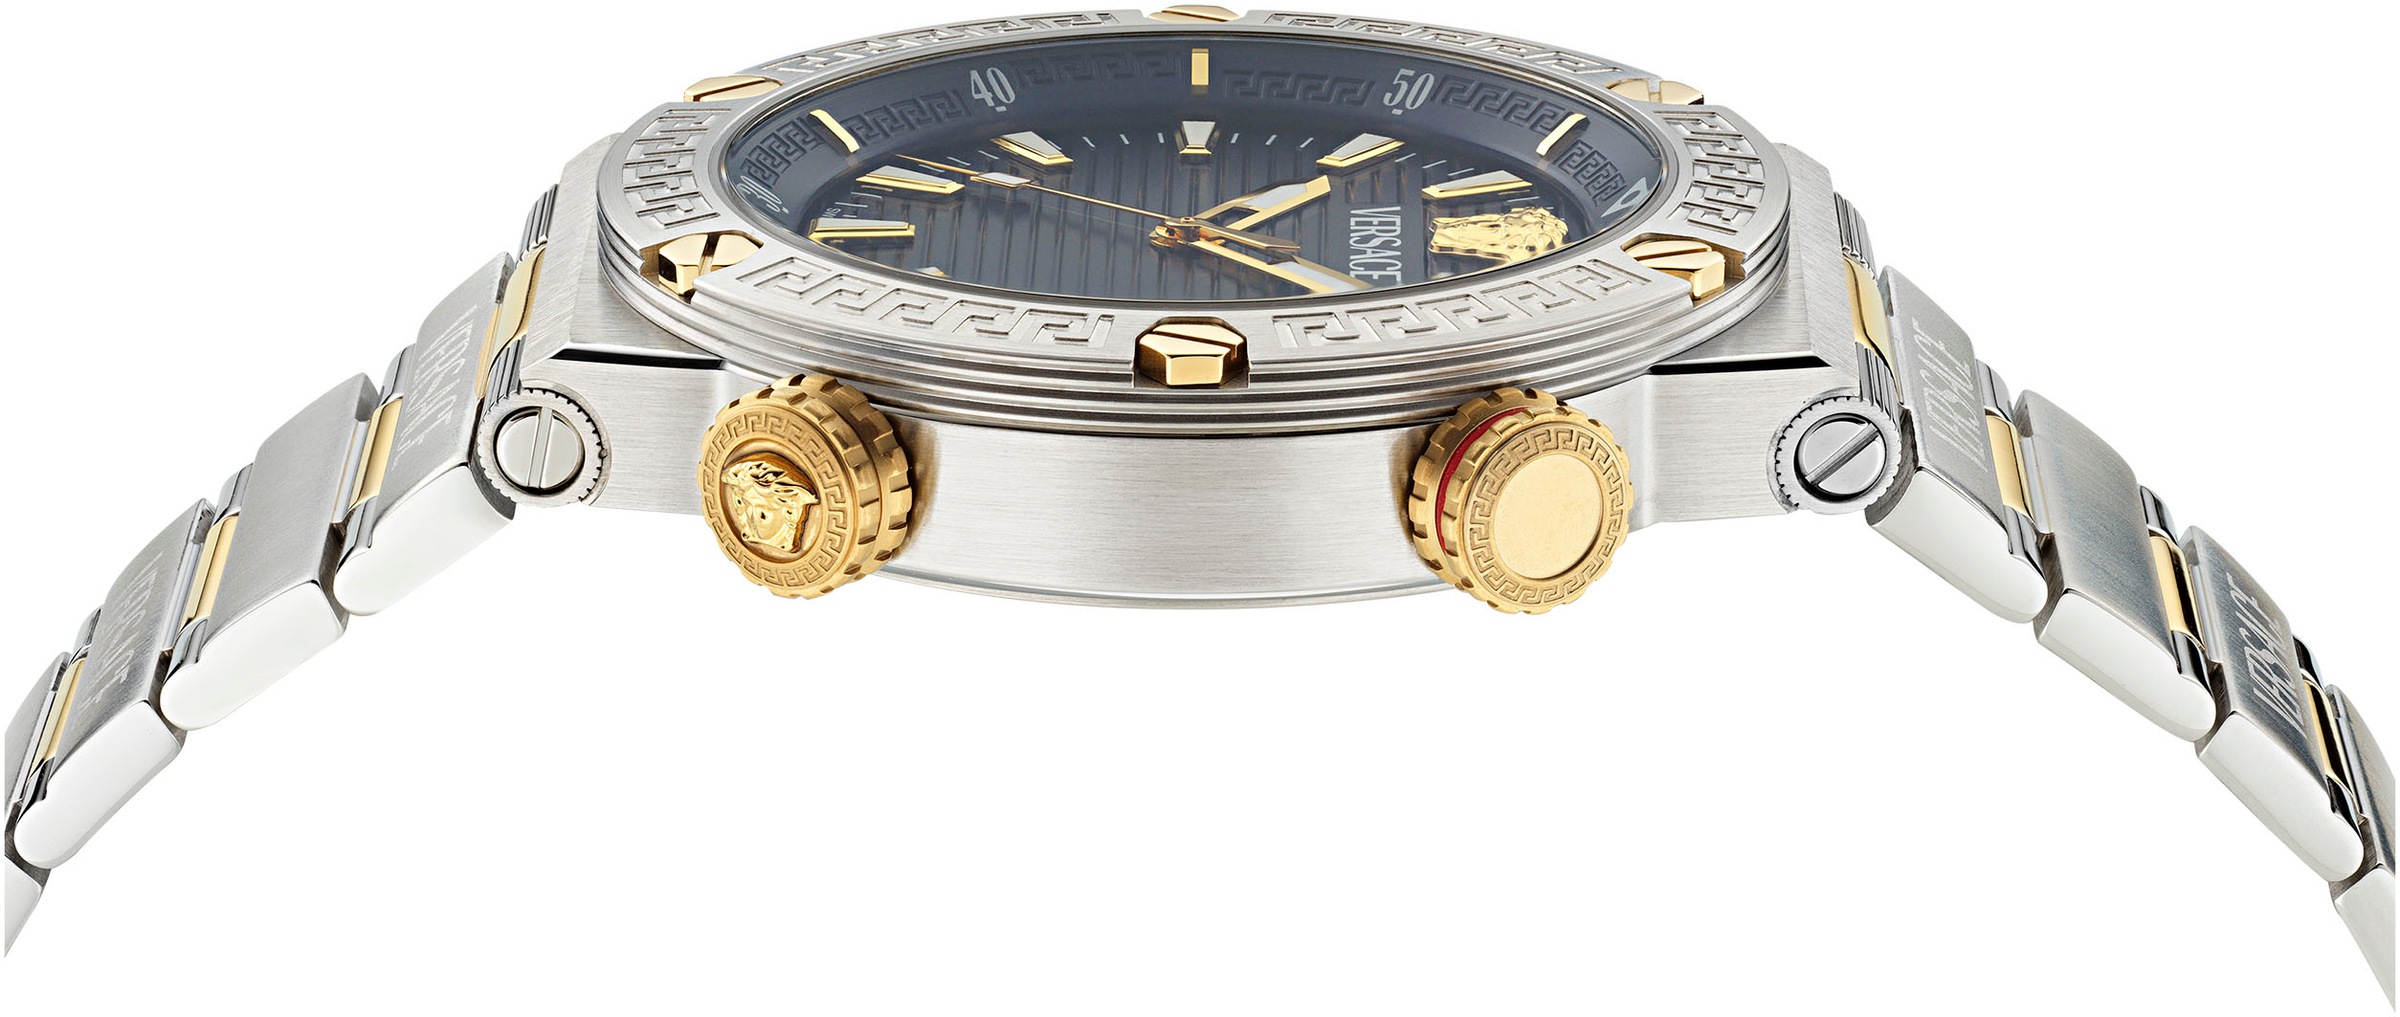 Versace Chronograph »GRECA LOGO DIVER«, Quarzuhr, Armbanduhr, Herrenuhr, Datum, Stoppfunktion, Swiss Made